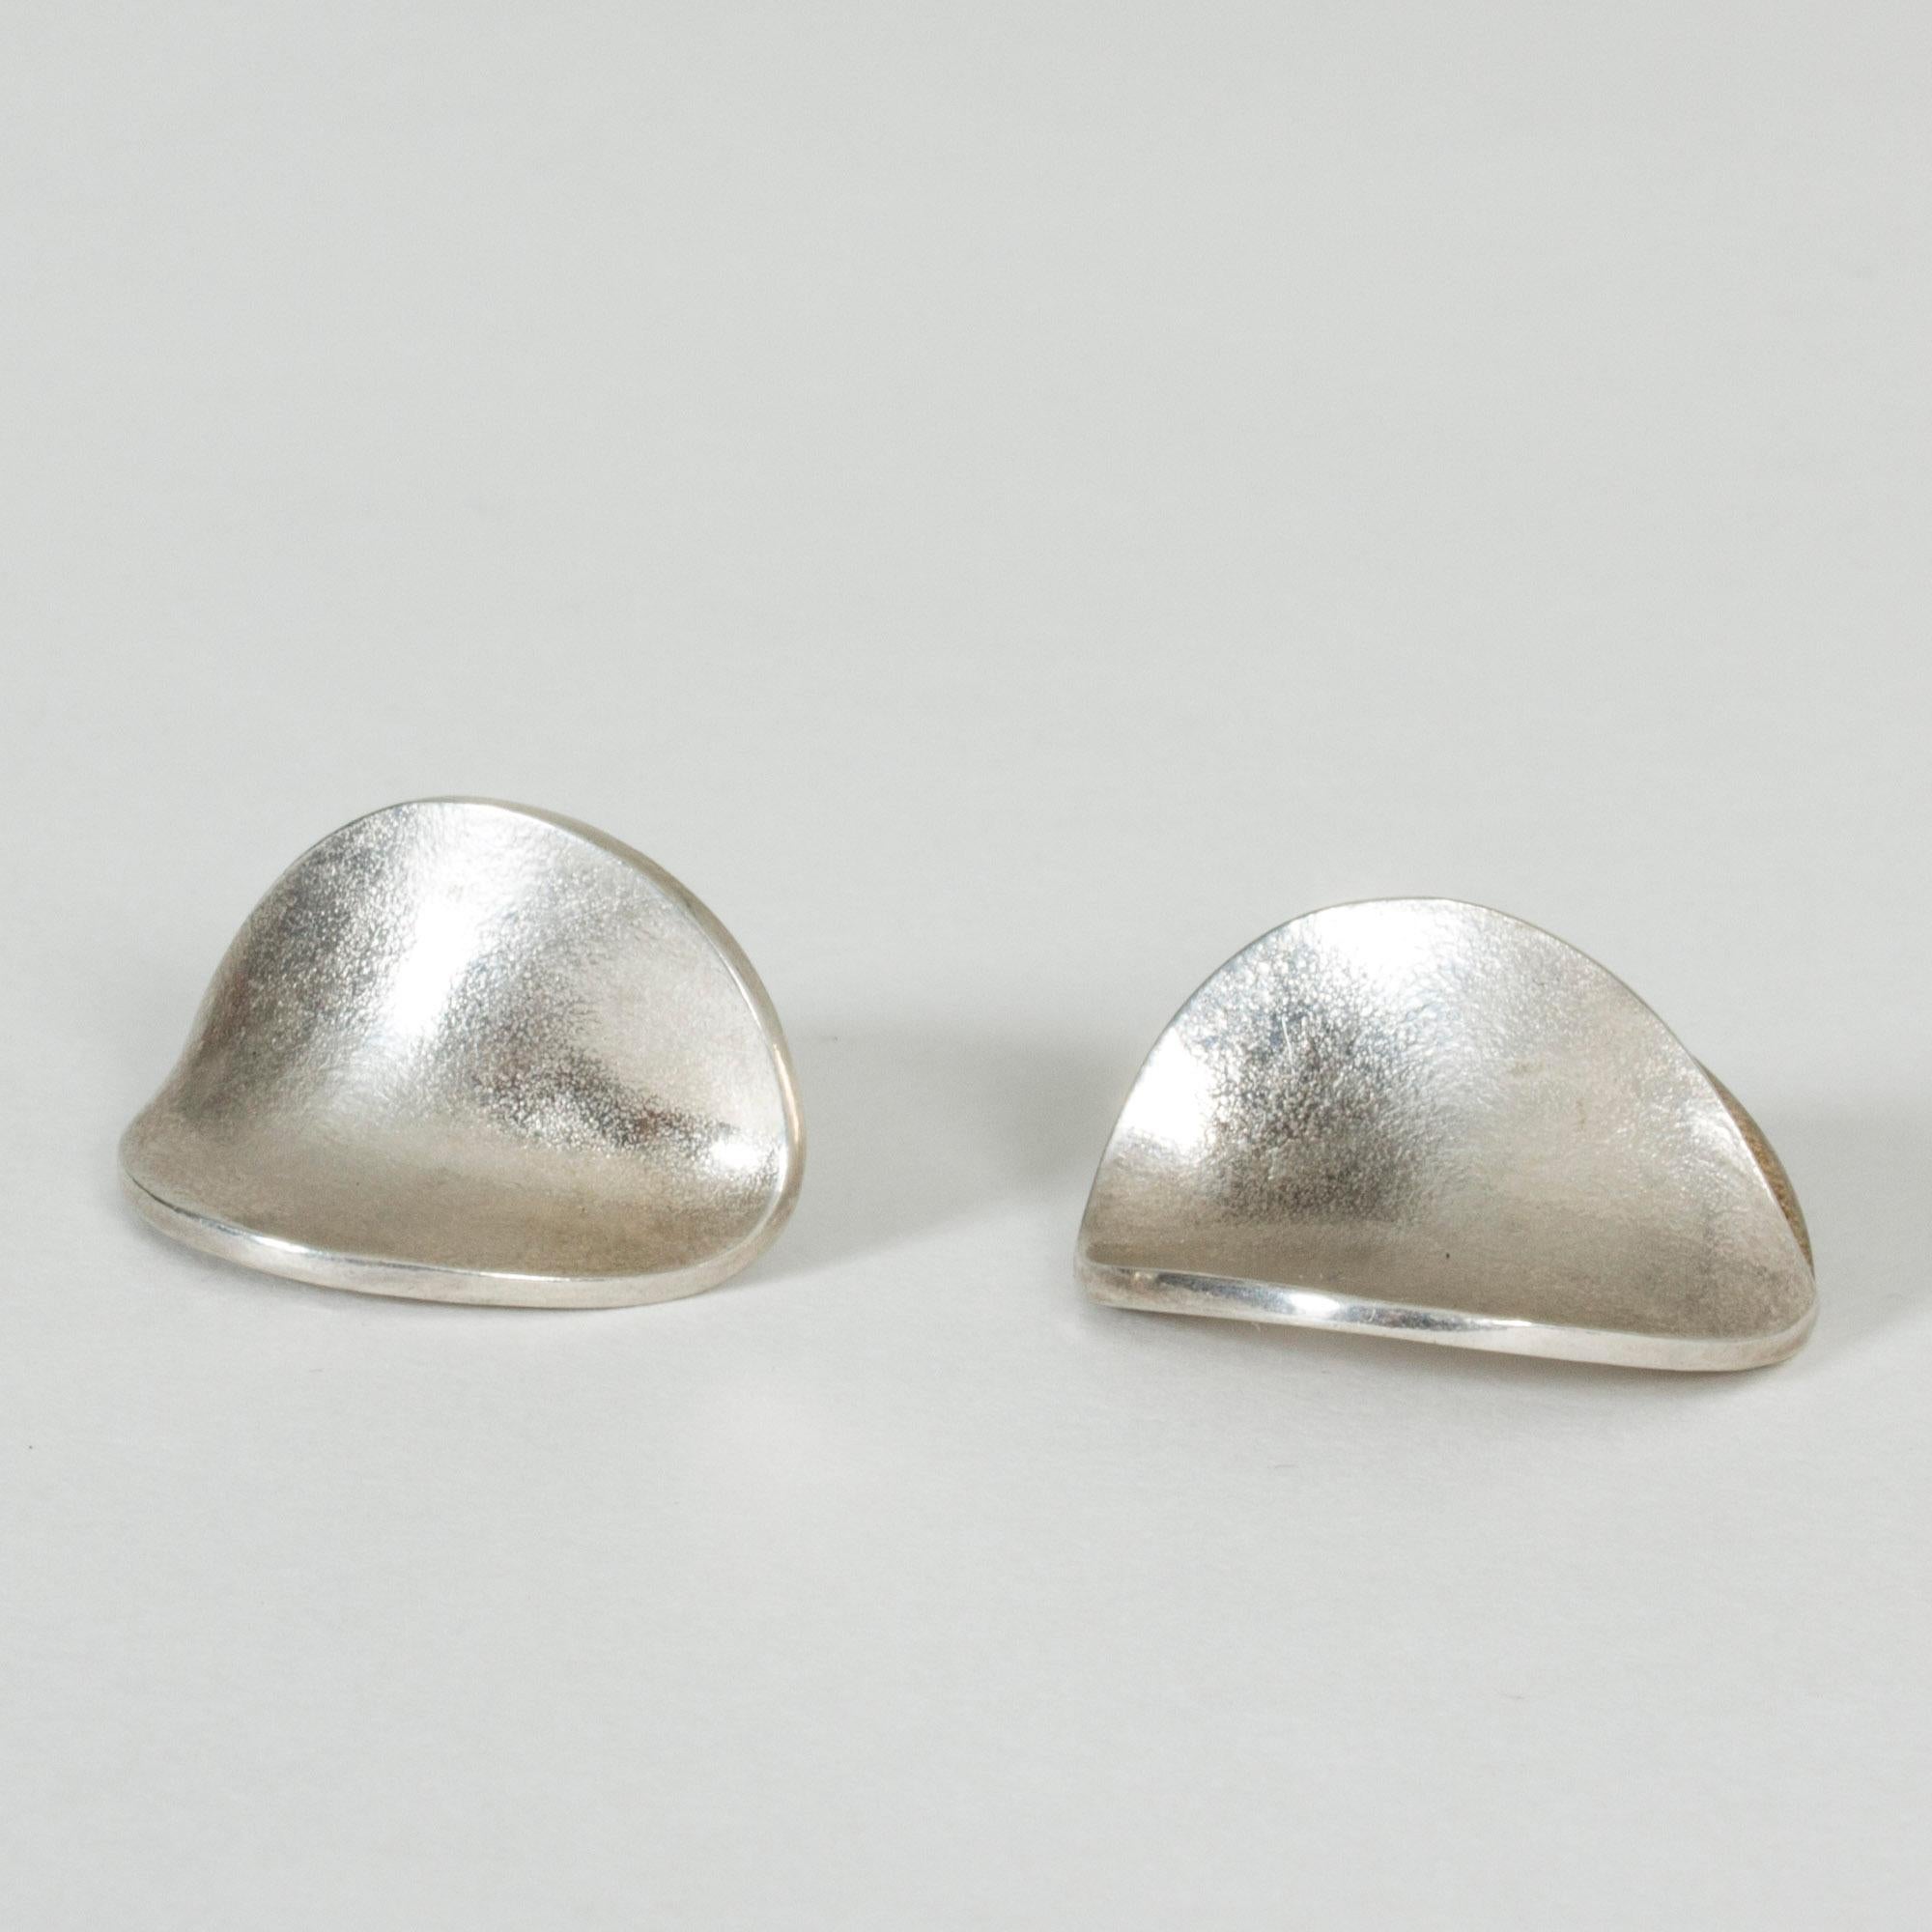 Pair of beautiful silver earrings by Björn Weckström. Flower petal like design with a frosty surface.